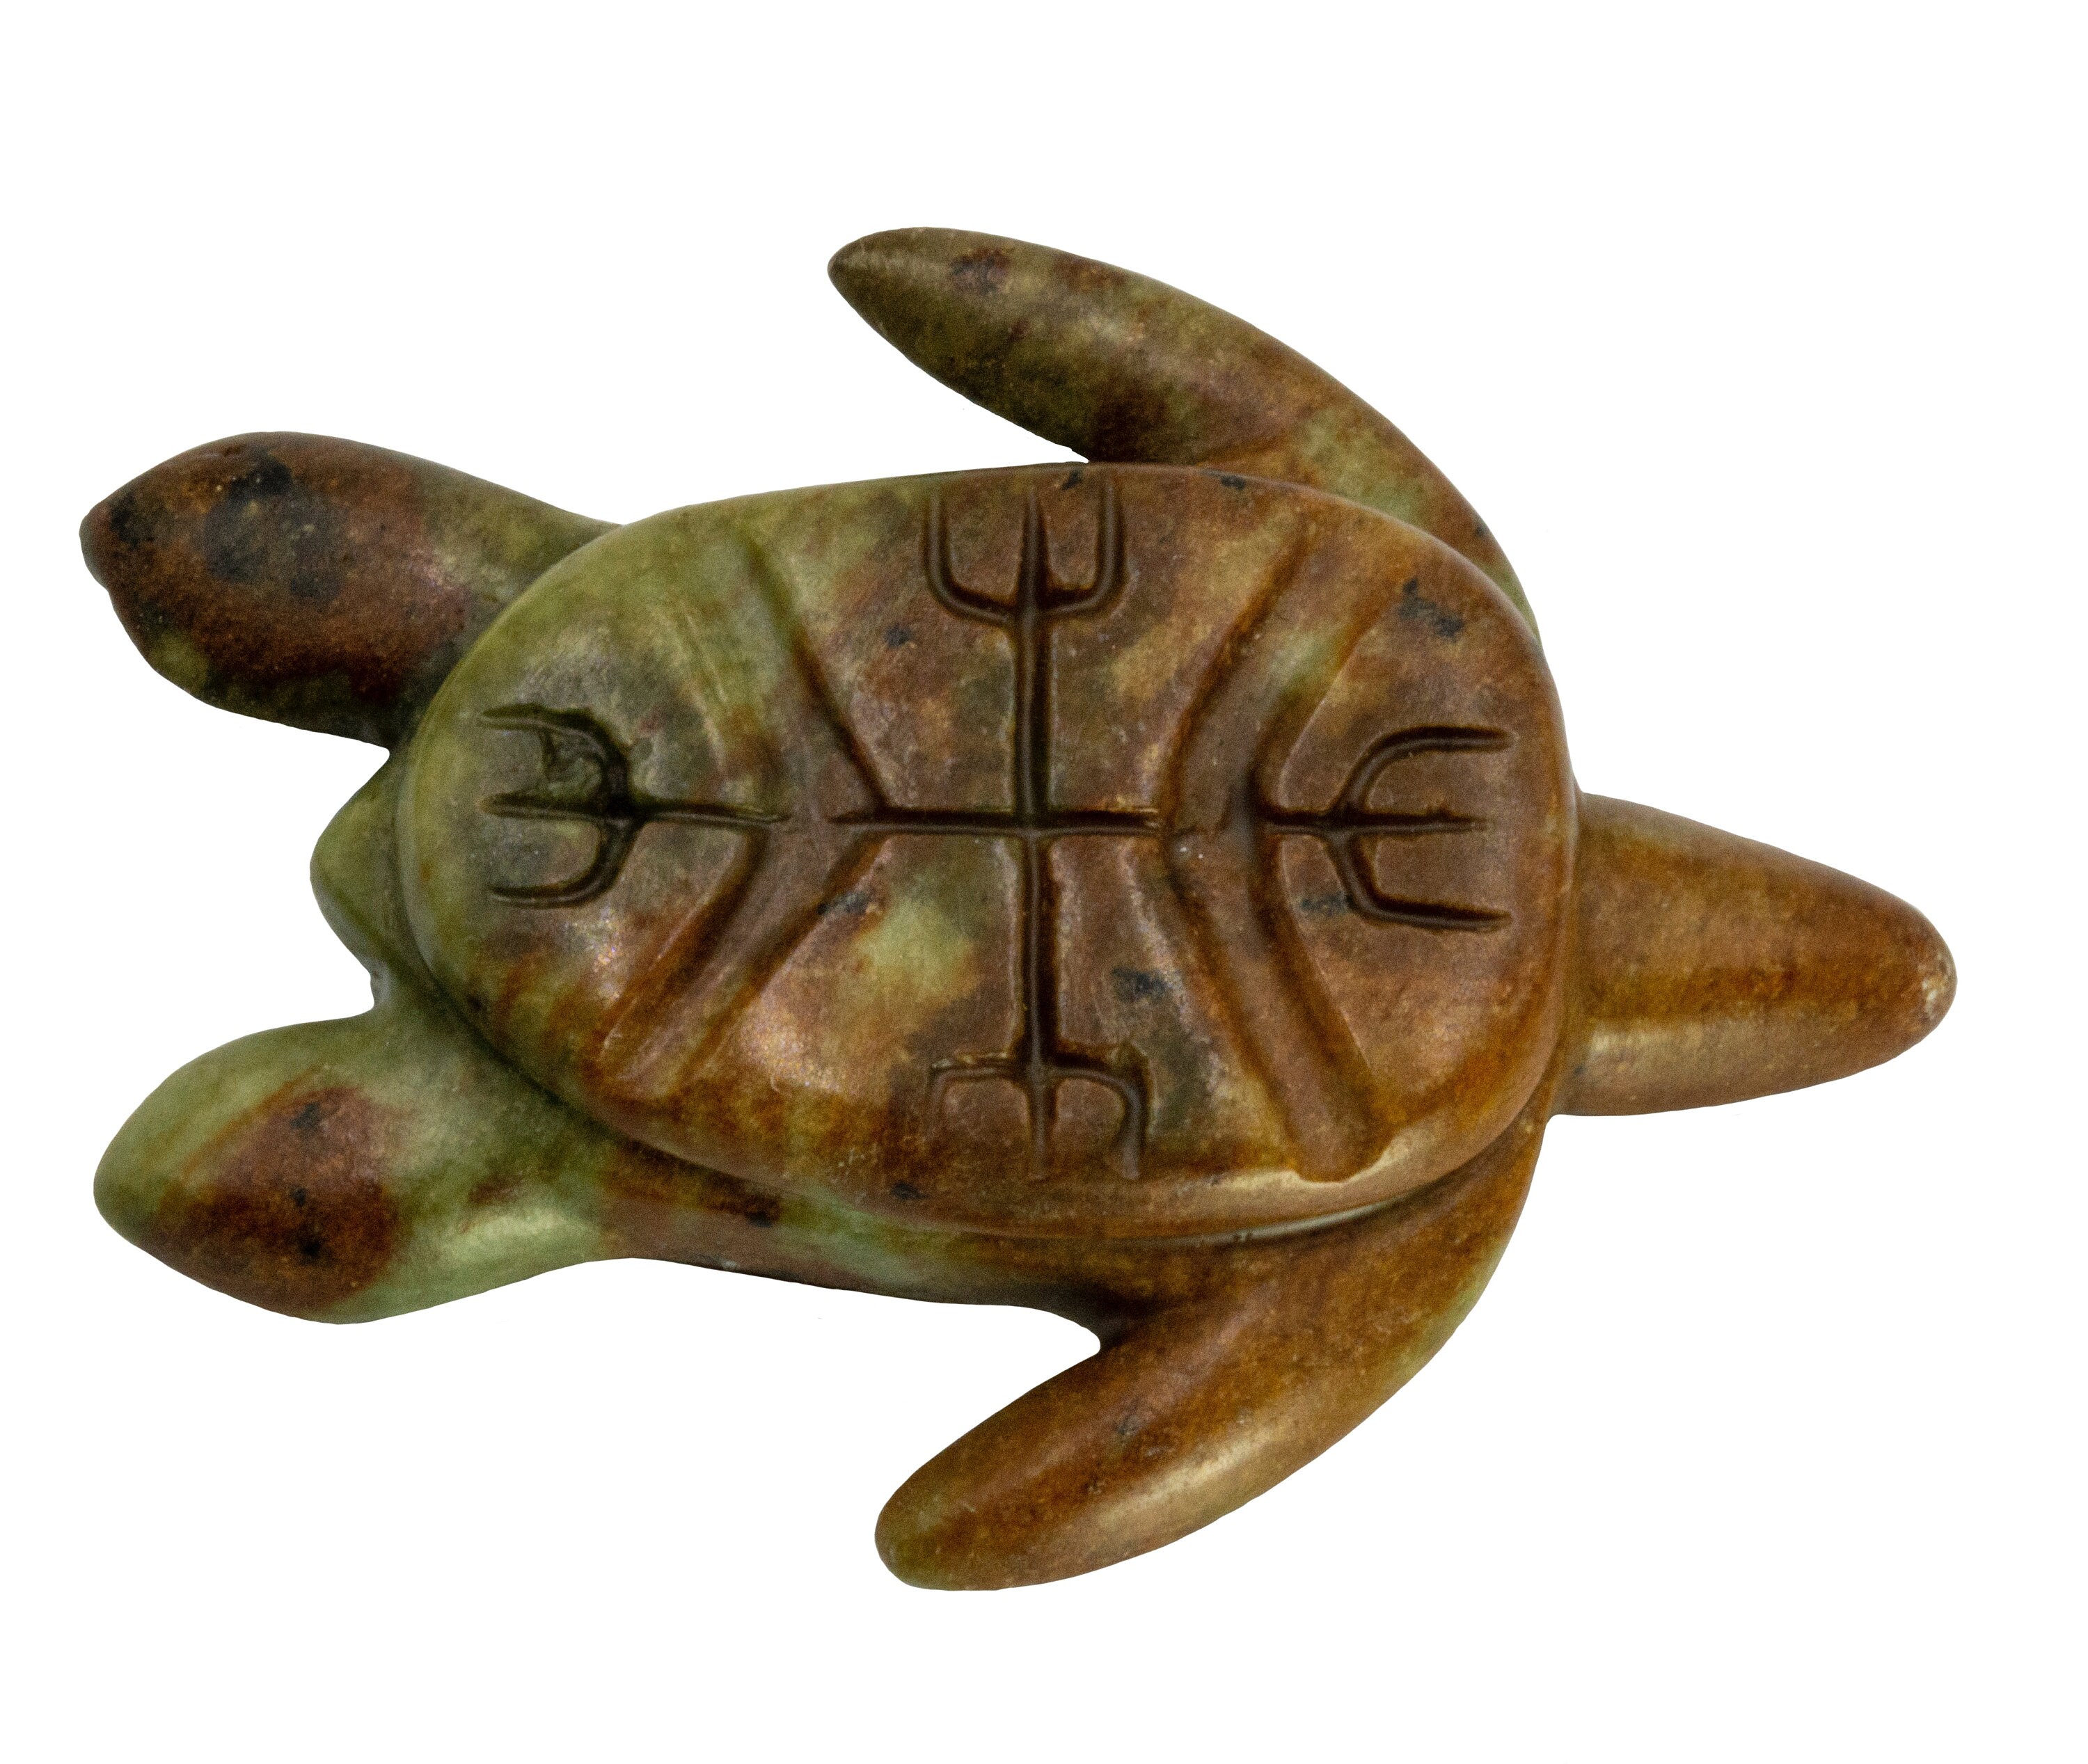  STUDIOSTONE CREATIVE DIY Arts & Crafts Carving Kit Kids Adults  Turtle Sculpture Soapstone